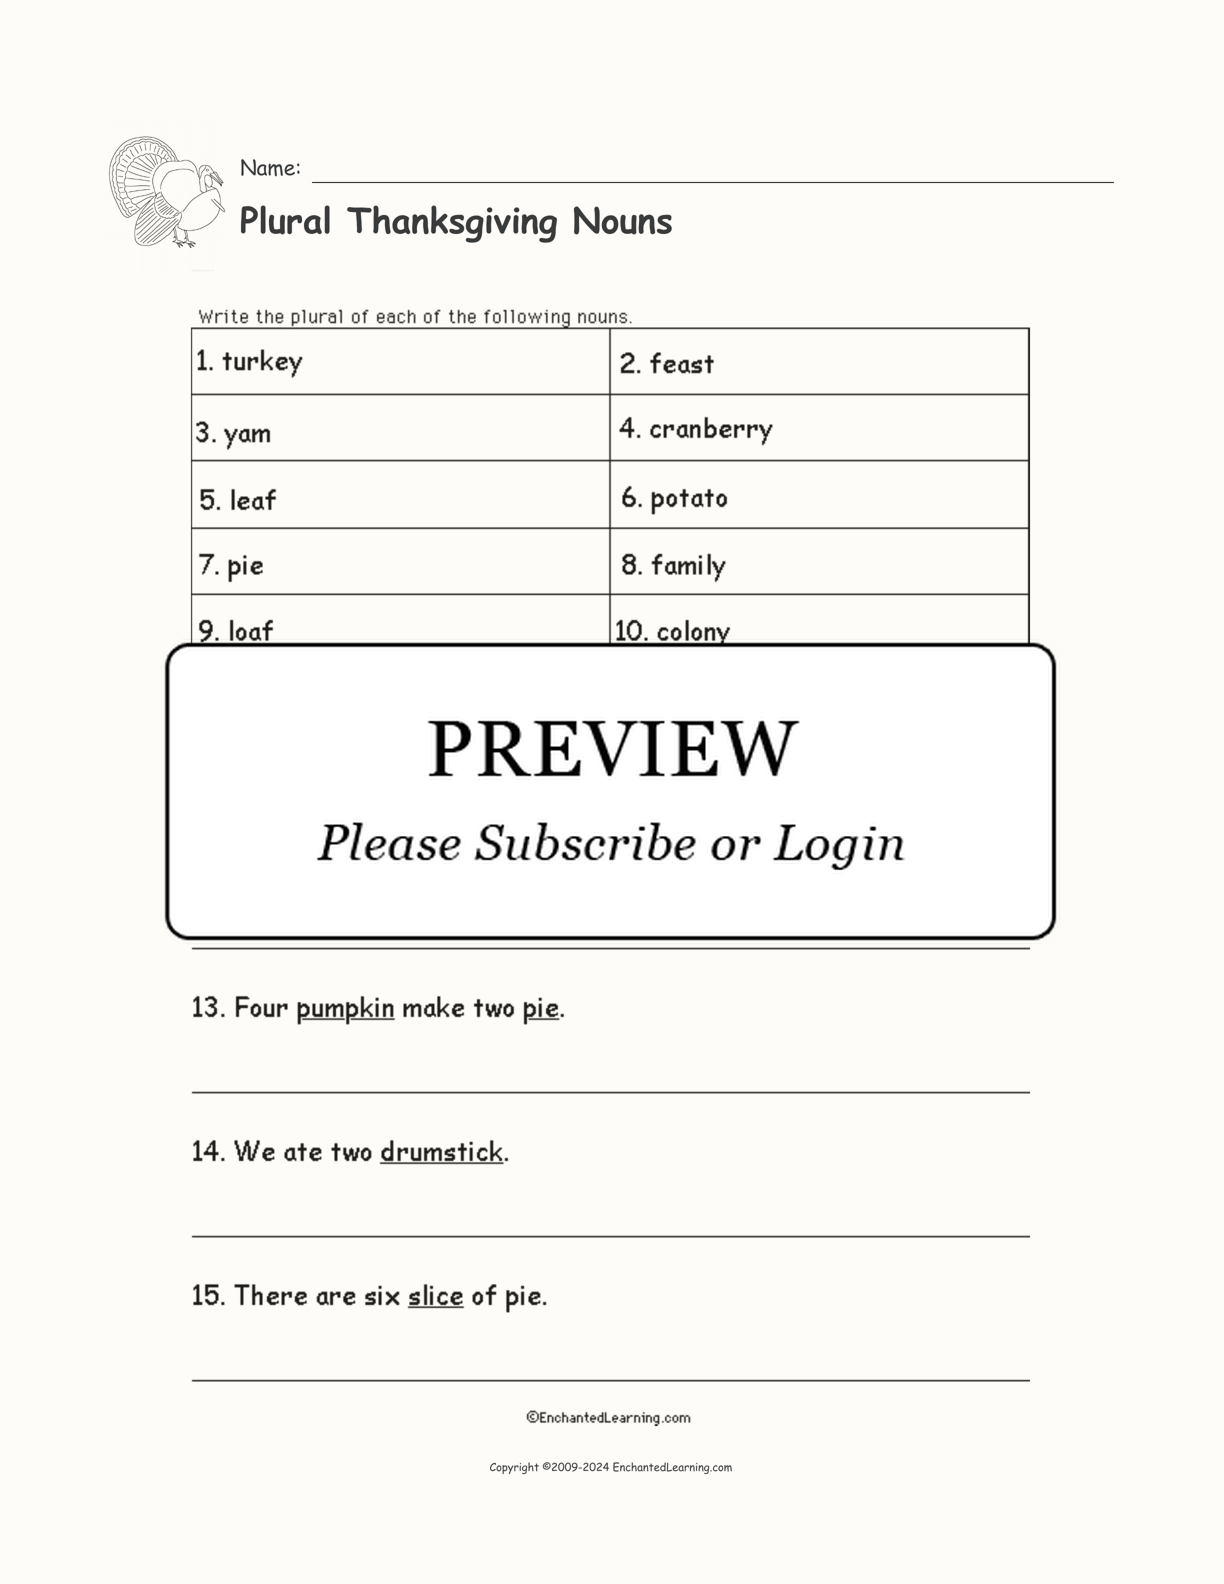 Plural Thanksgiving Nouns interactive worksheet page 1